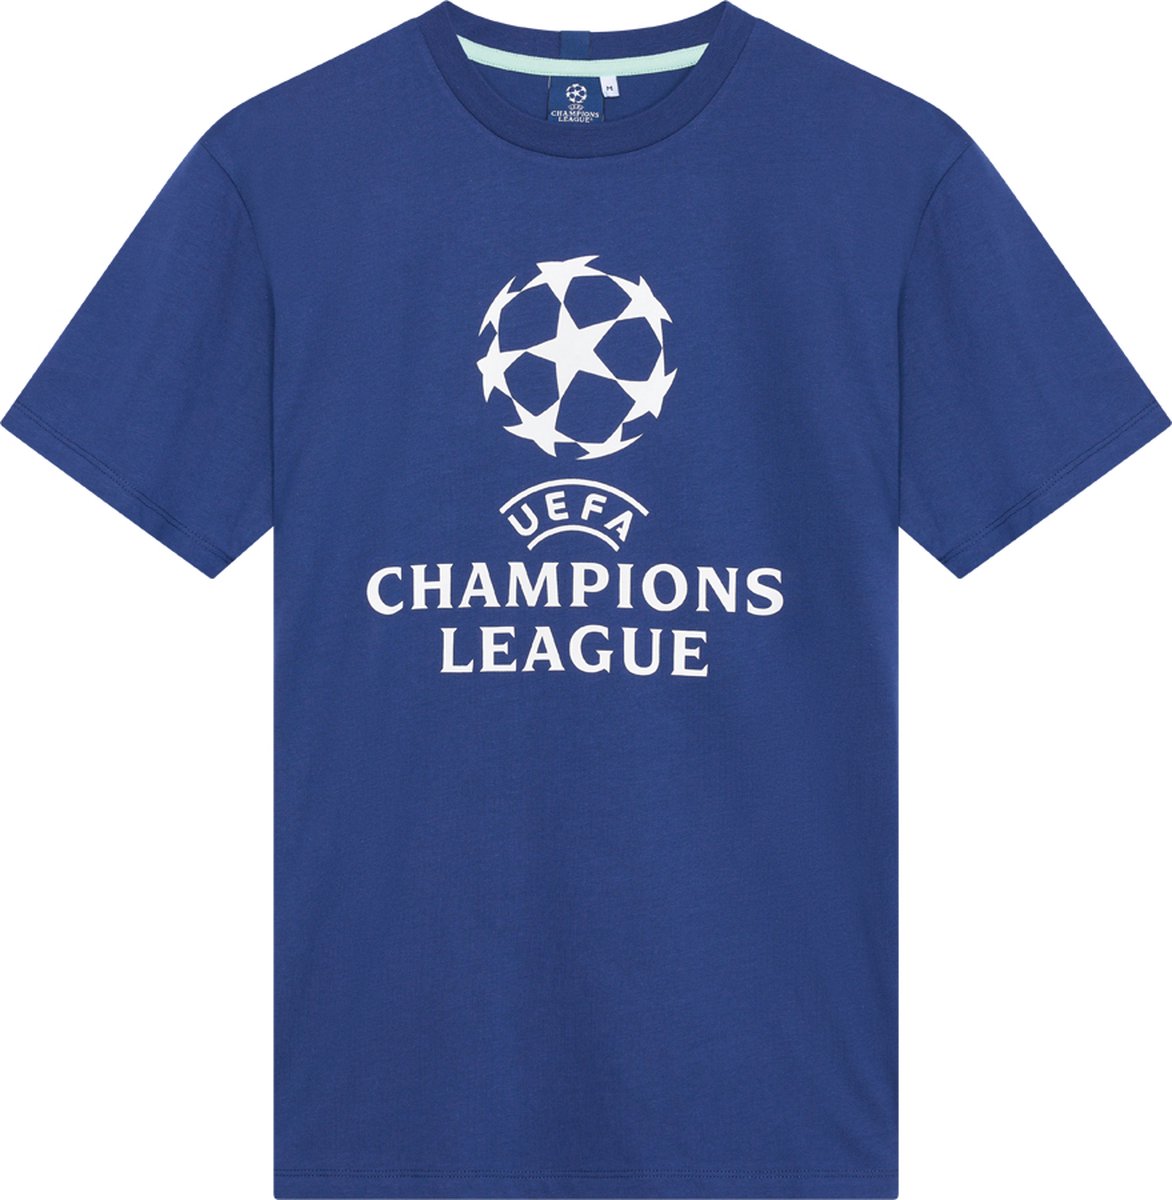 Champions League logo t-shirt senior - blauw - maat M